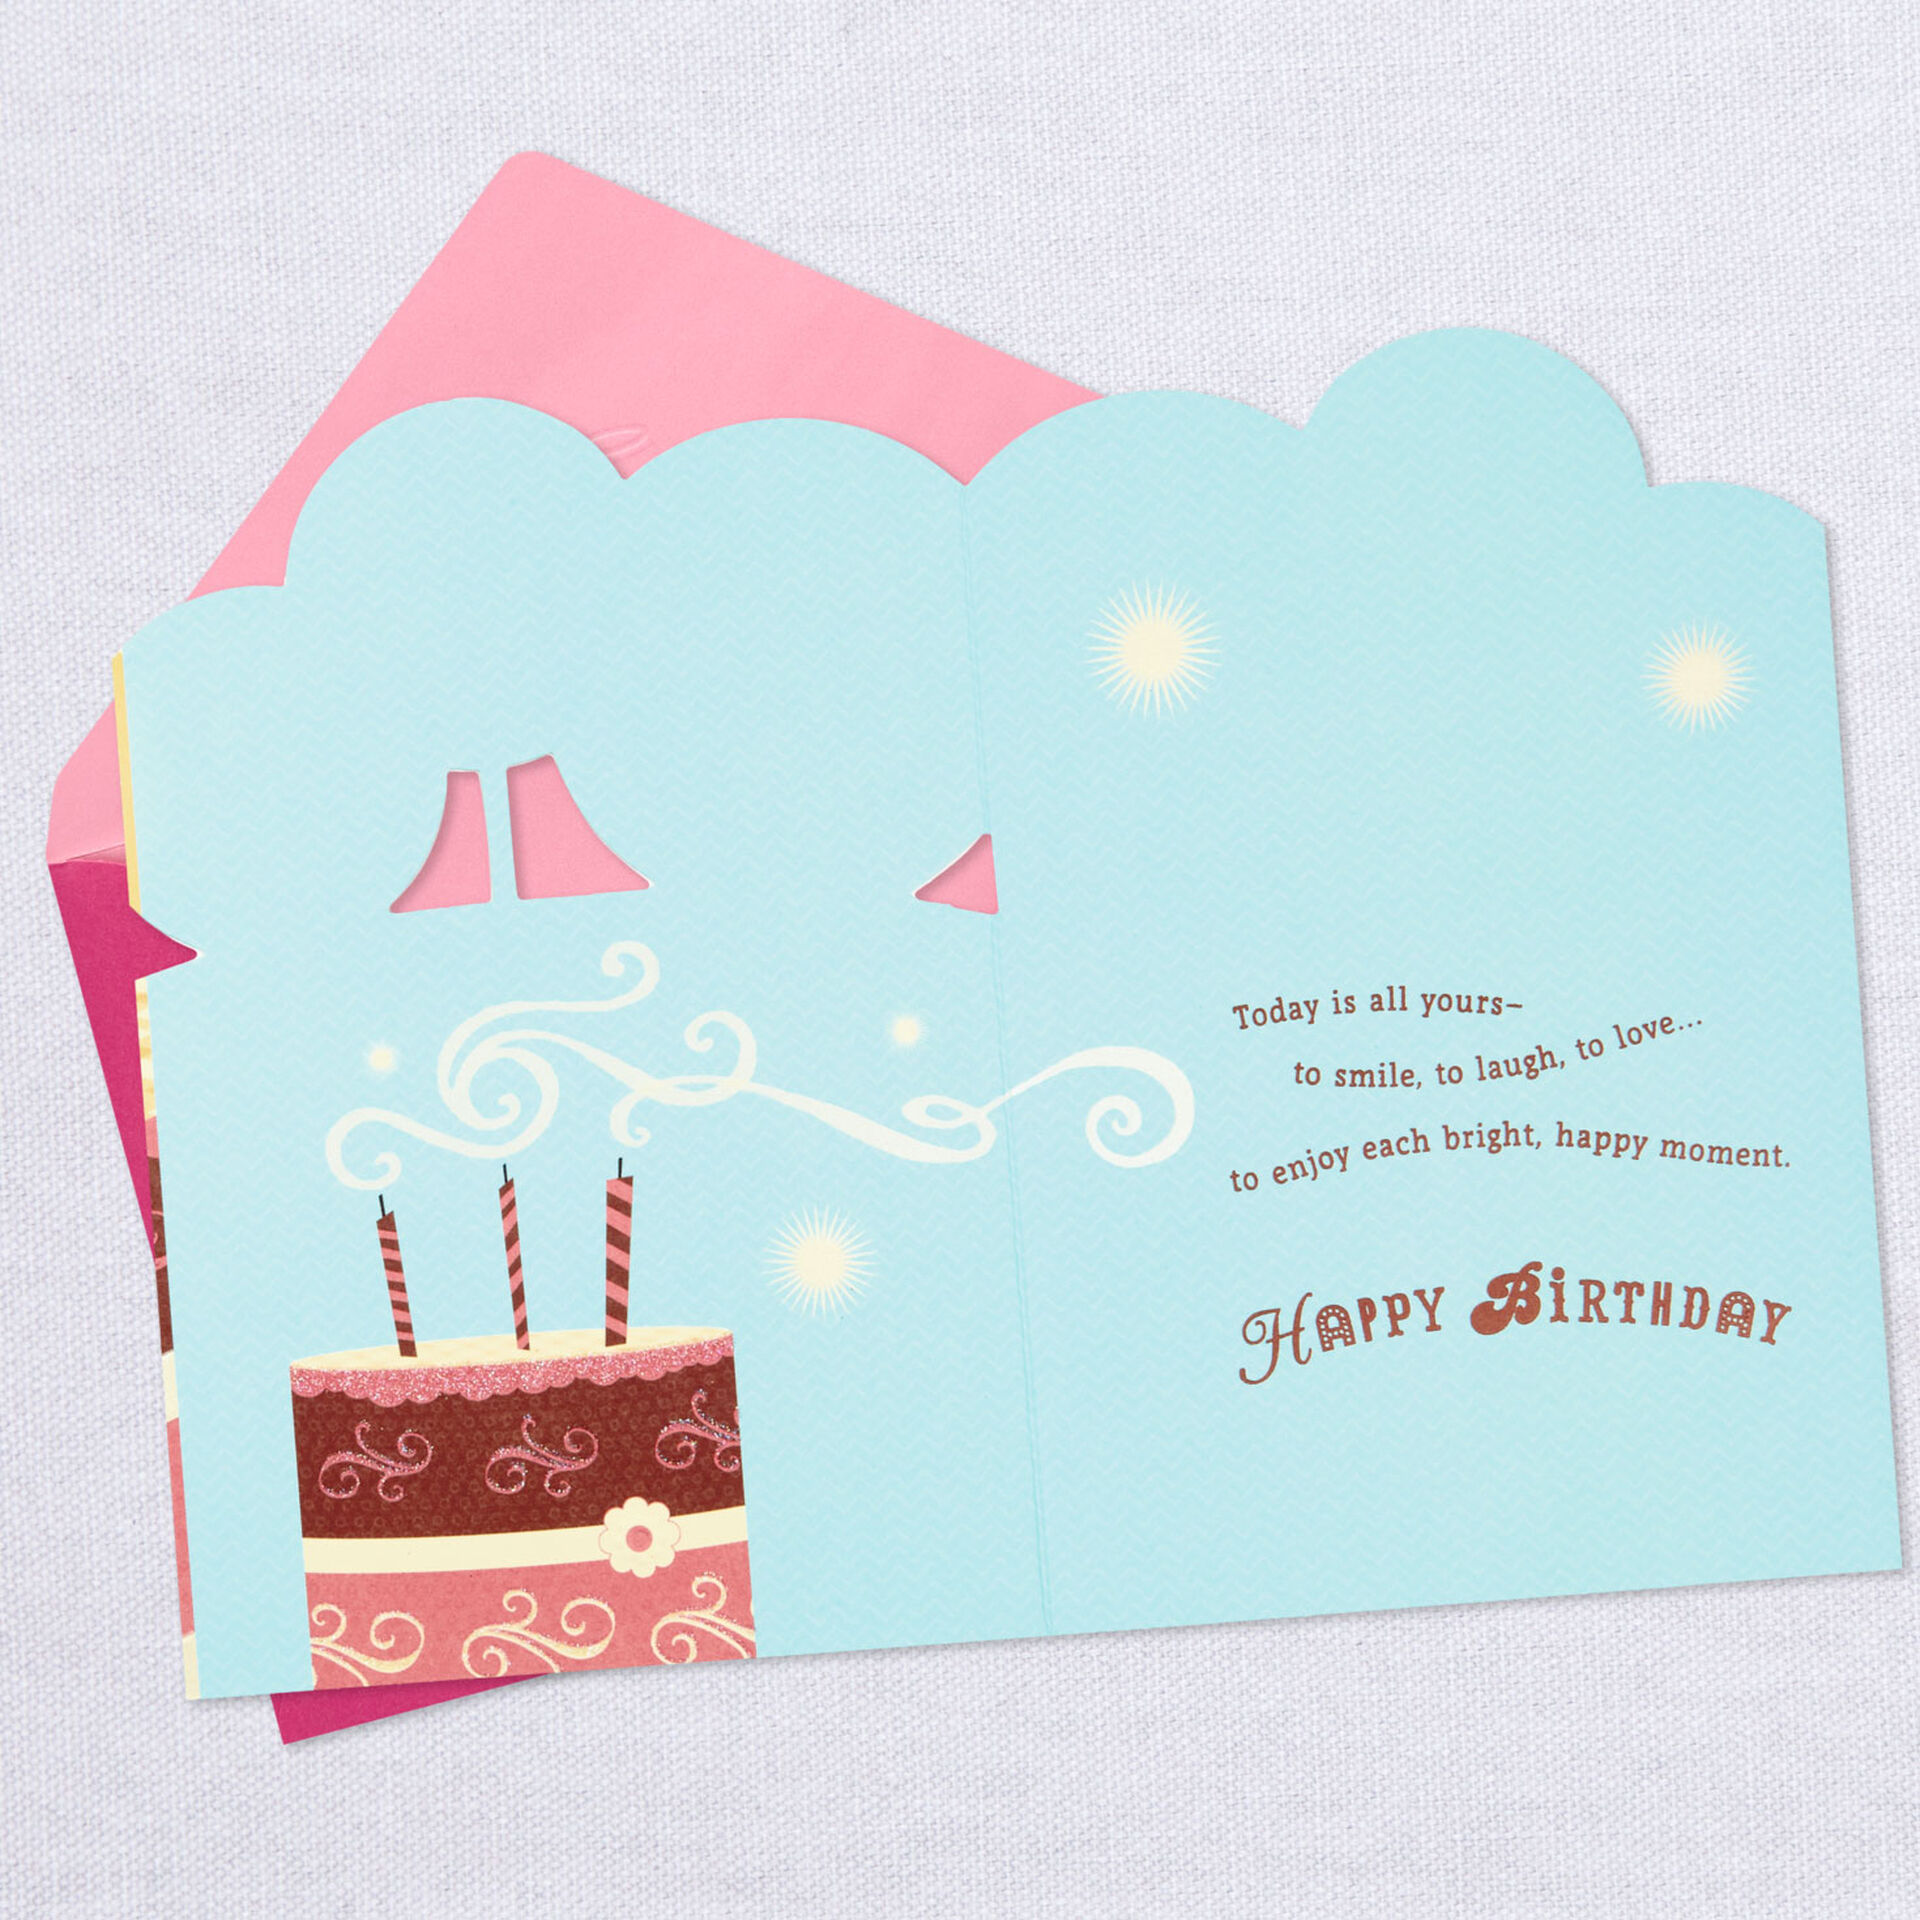 Make-a-Wish-Vintage-Cake-Birthday-Card-for-Mom_659FBD3633_03